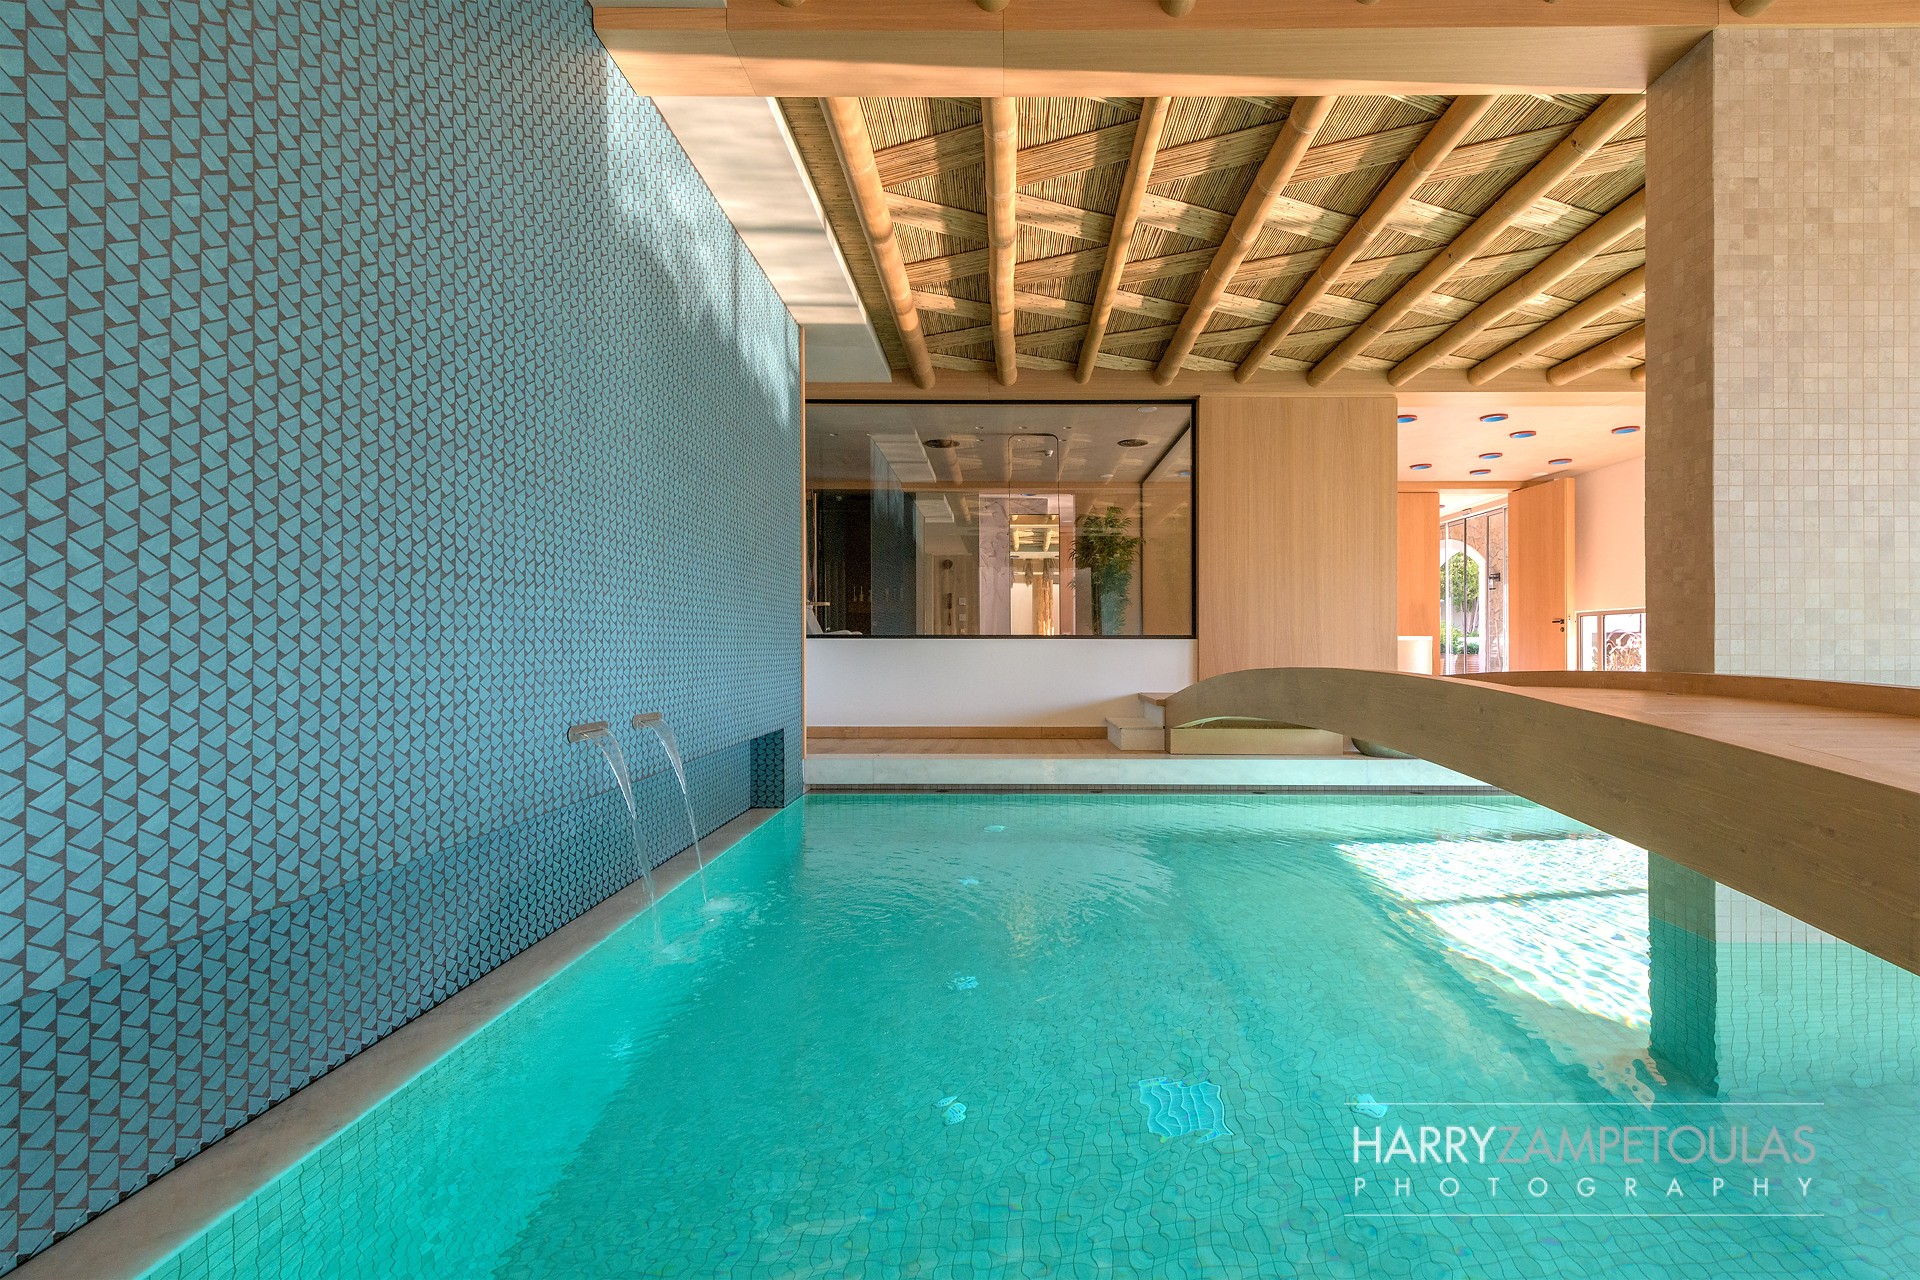 SPA-Pool-Day-2 Porto Angeli Resort Hotel - Hotel Photography Harry Zampetoulas 